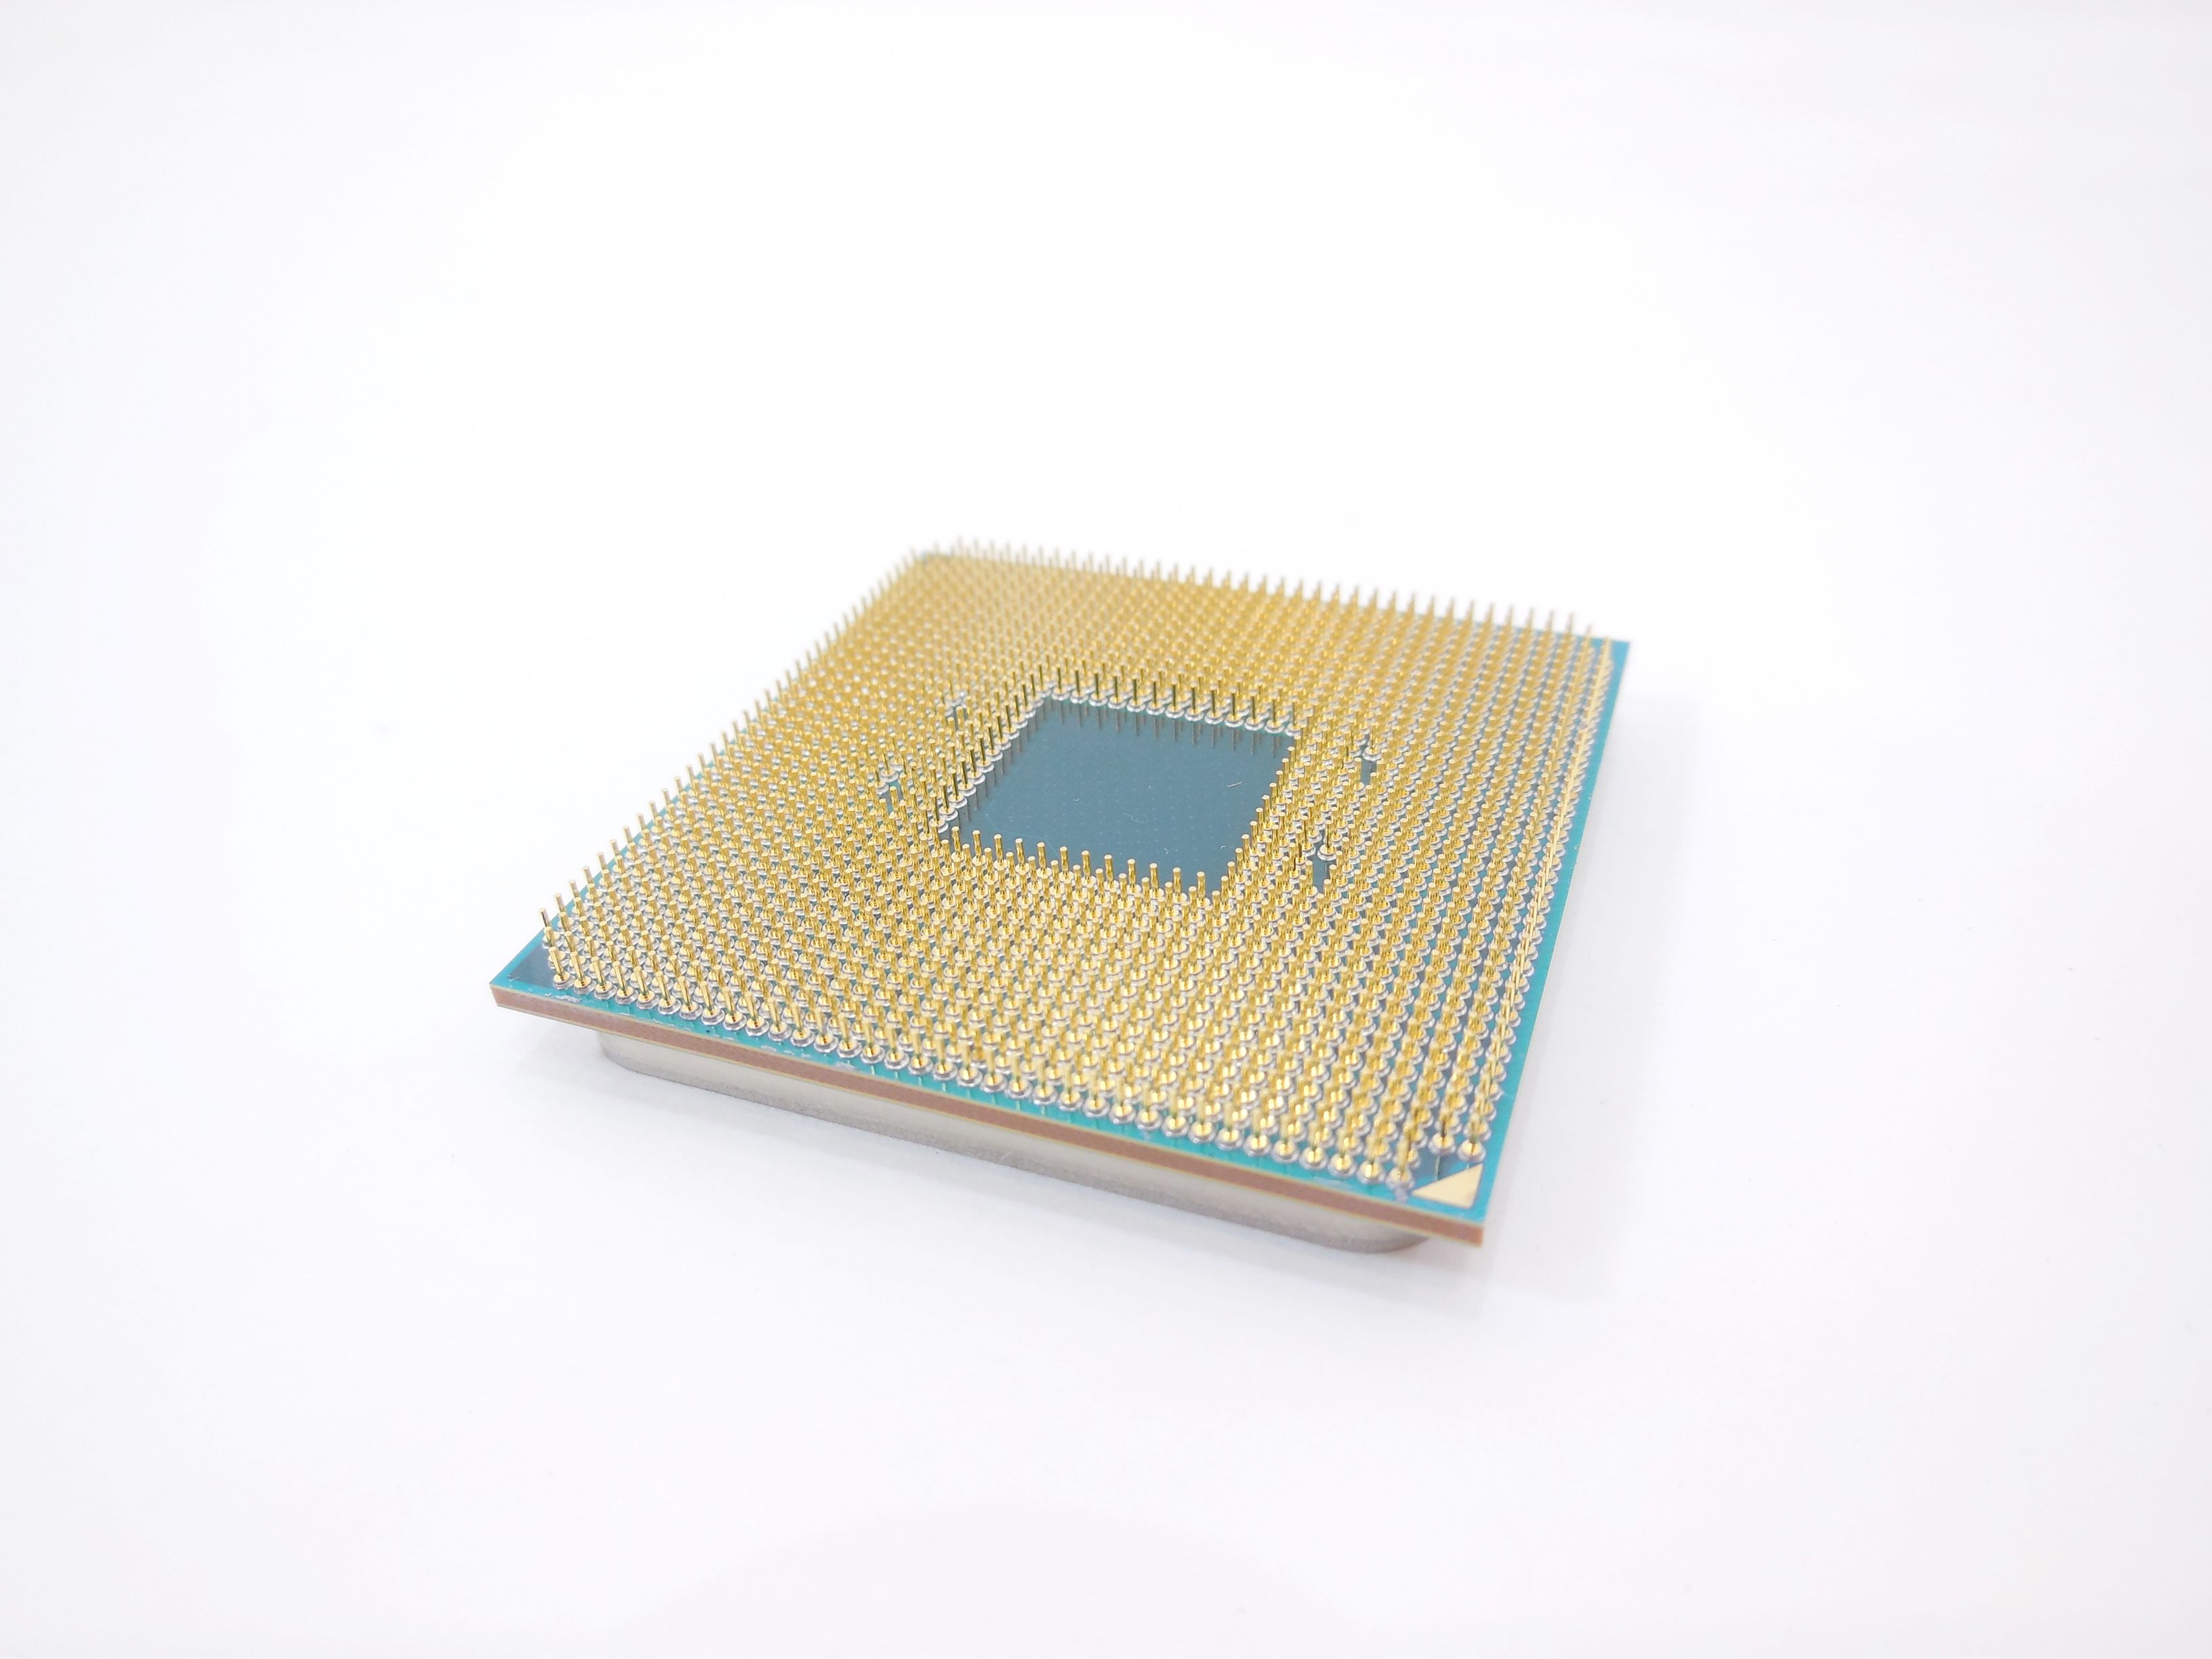 Процессоры 4 ядра частота 4 ггц. Процессор Socket am4 AMD Ryzen 7 1700. AMD Ryzen 5 2600. AMD am4 Socket. AMD сокет am4.